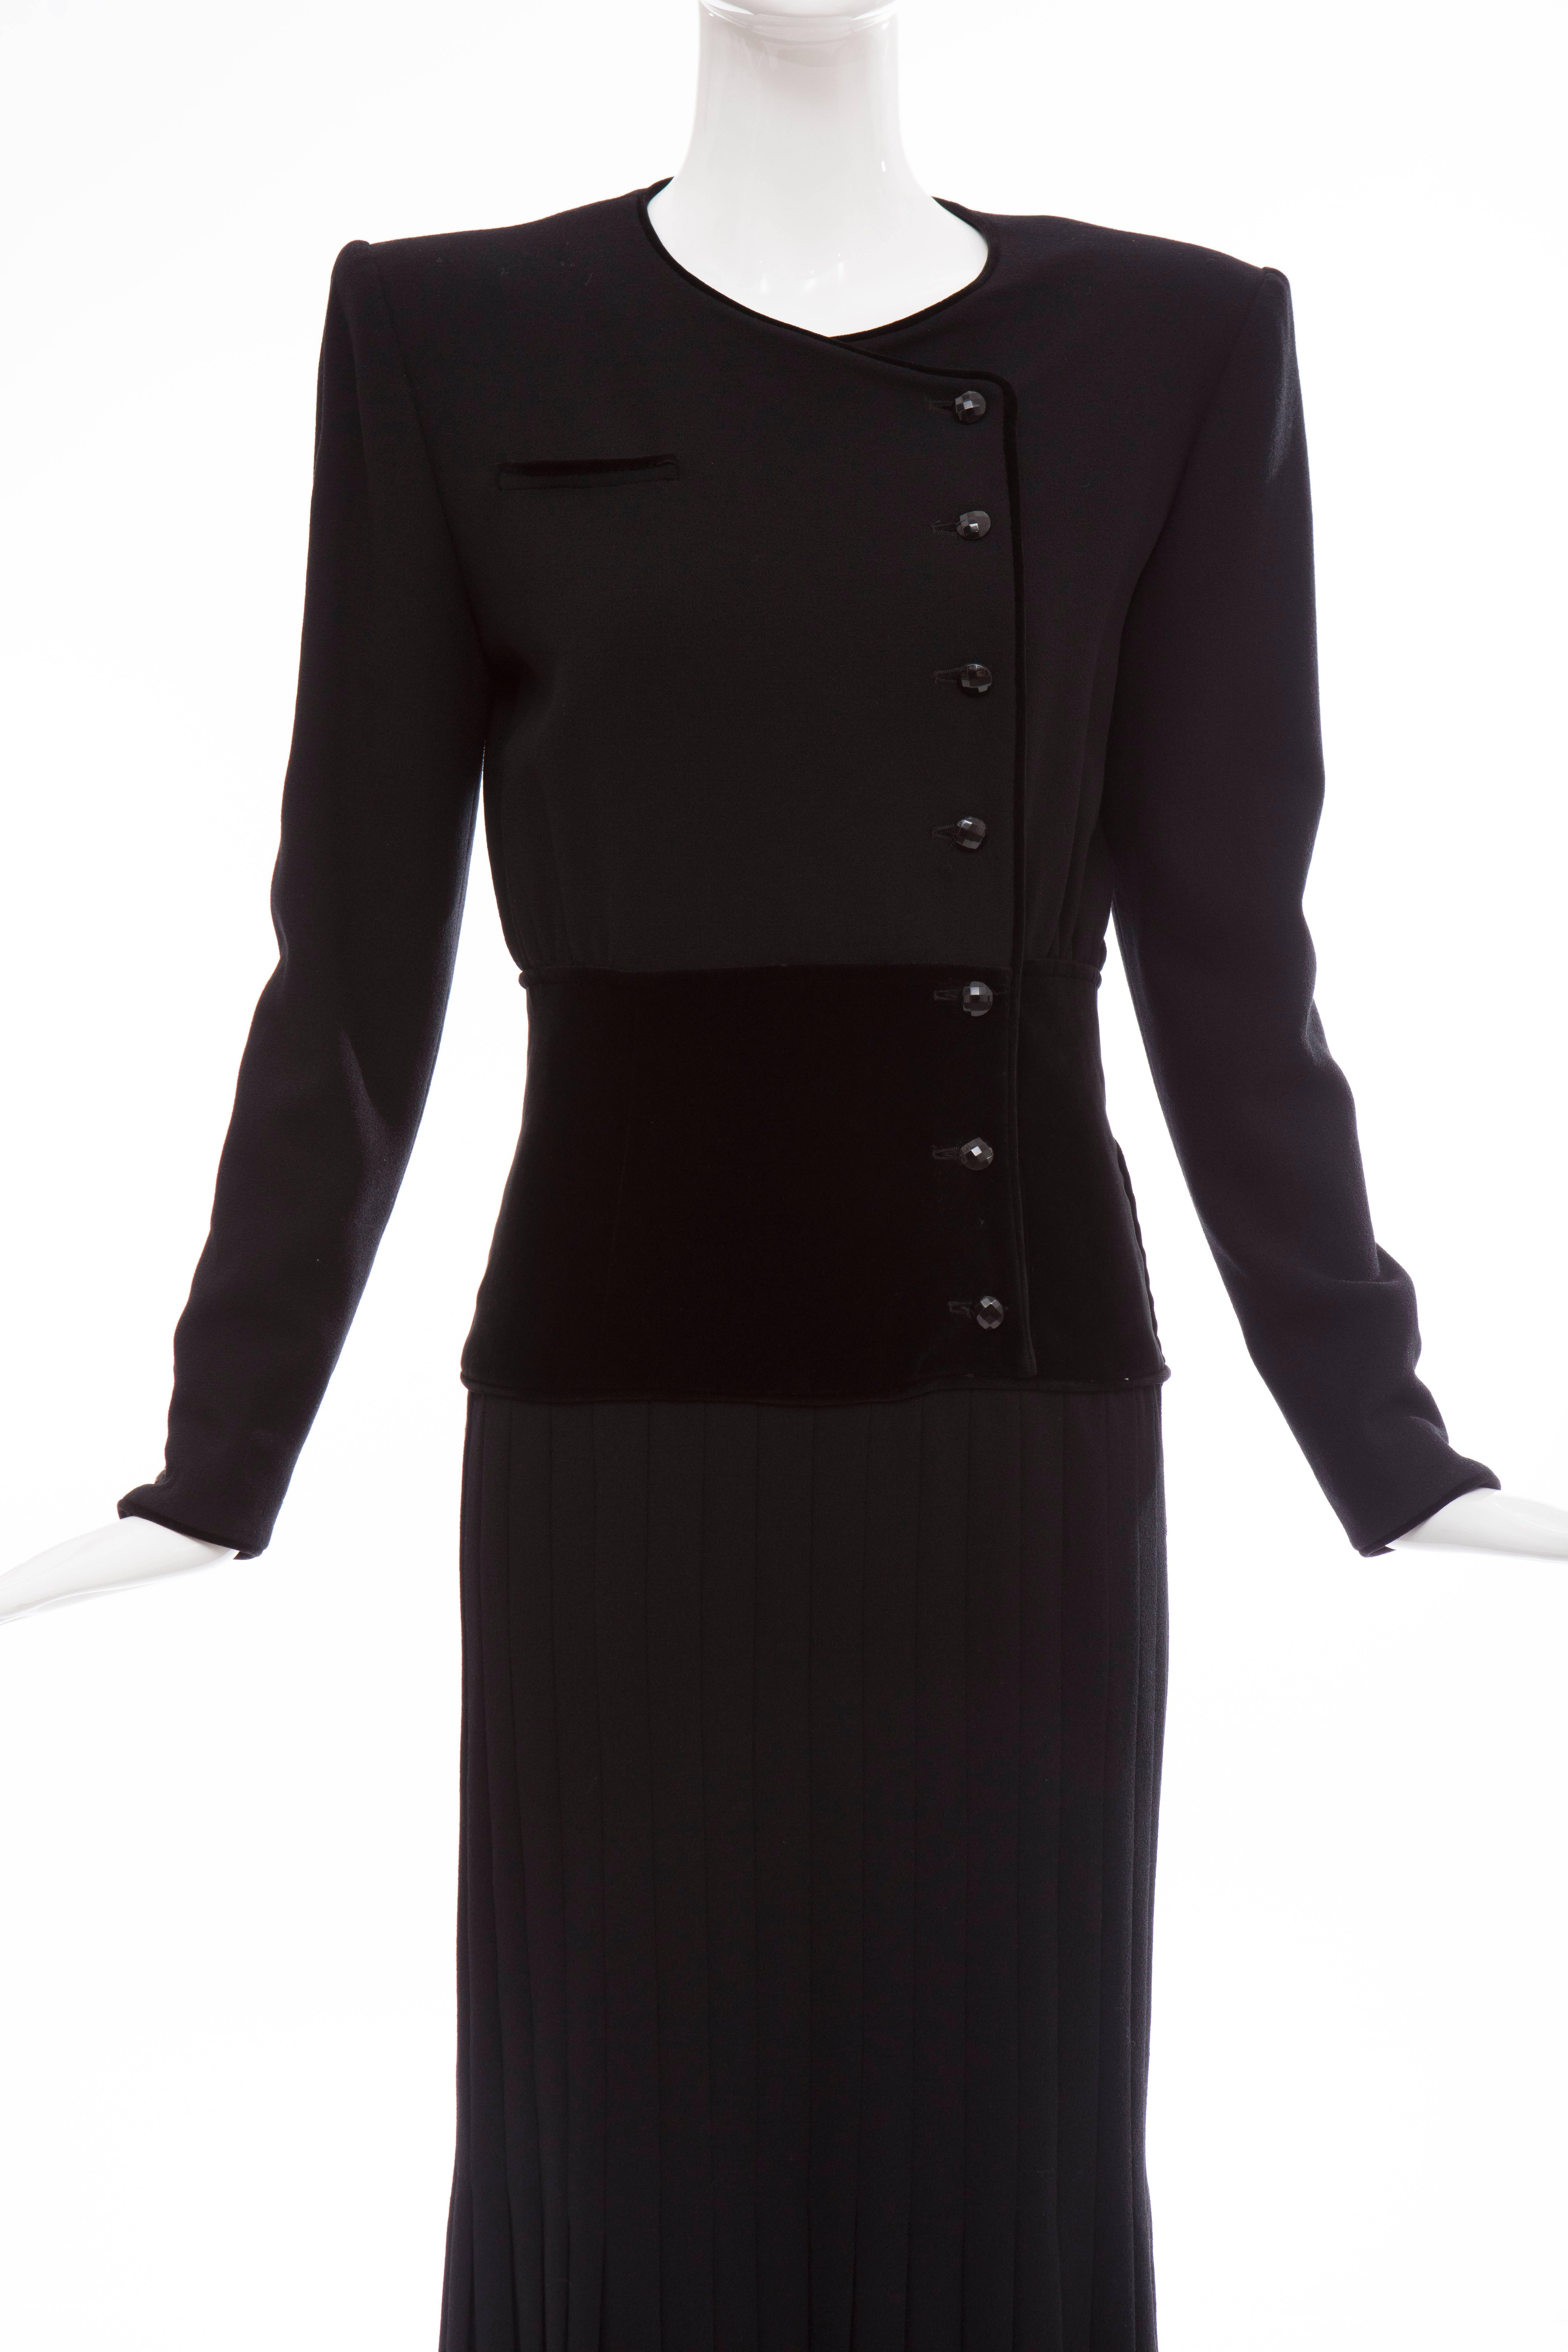 Women's Valentino Black Wool Crepe And Velvet Evening Dress, Circa 1980's For Sale